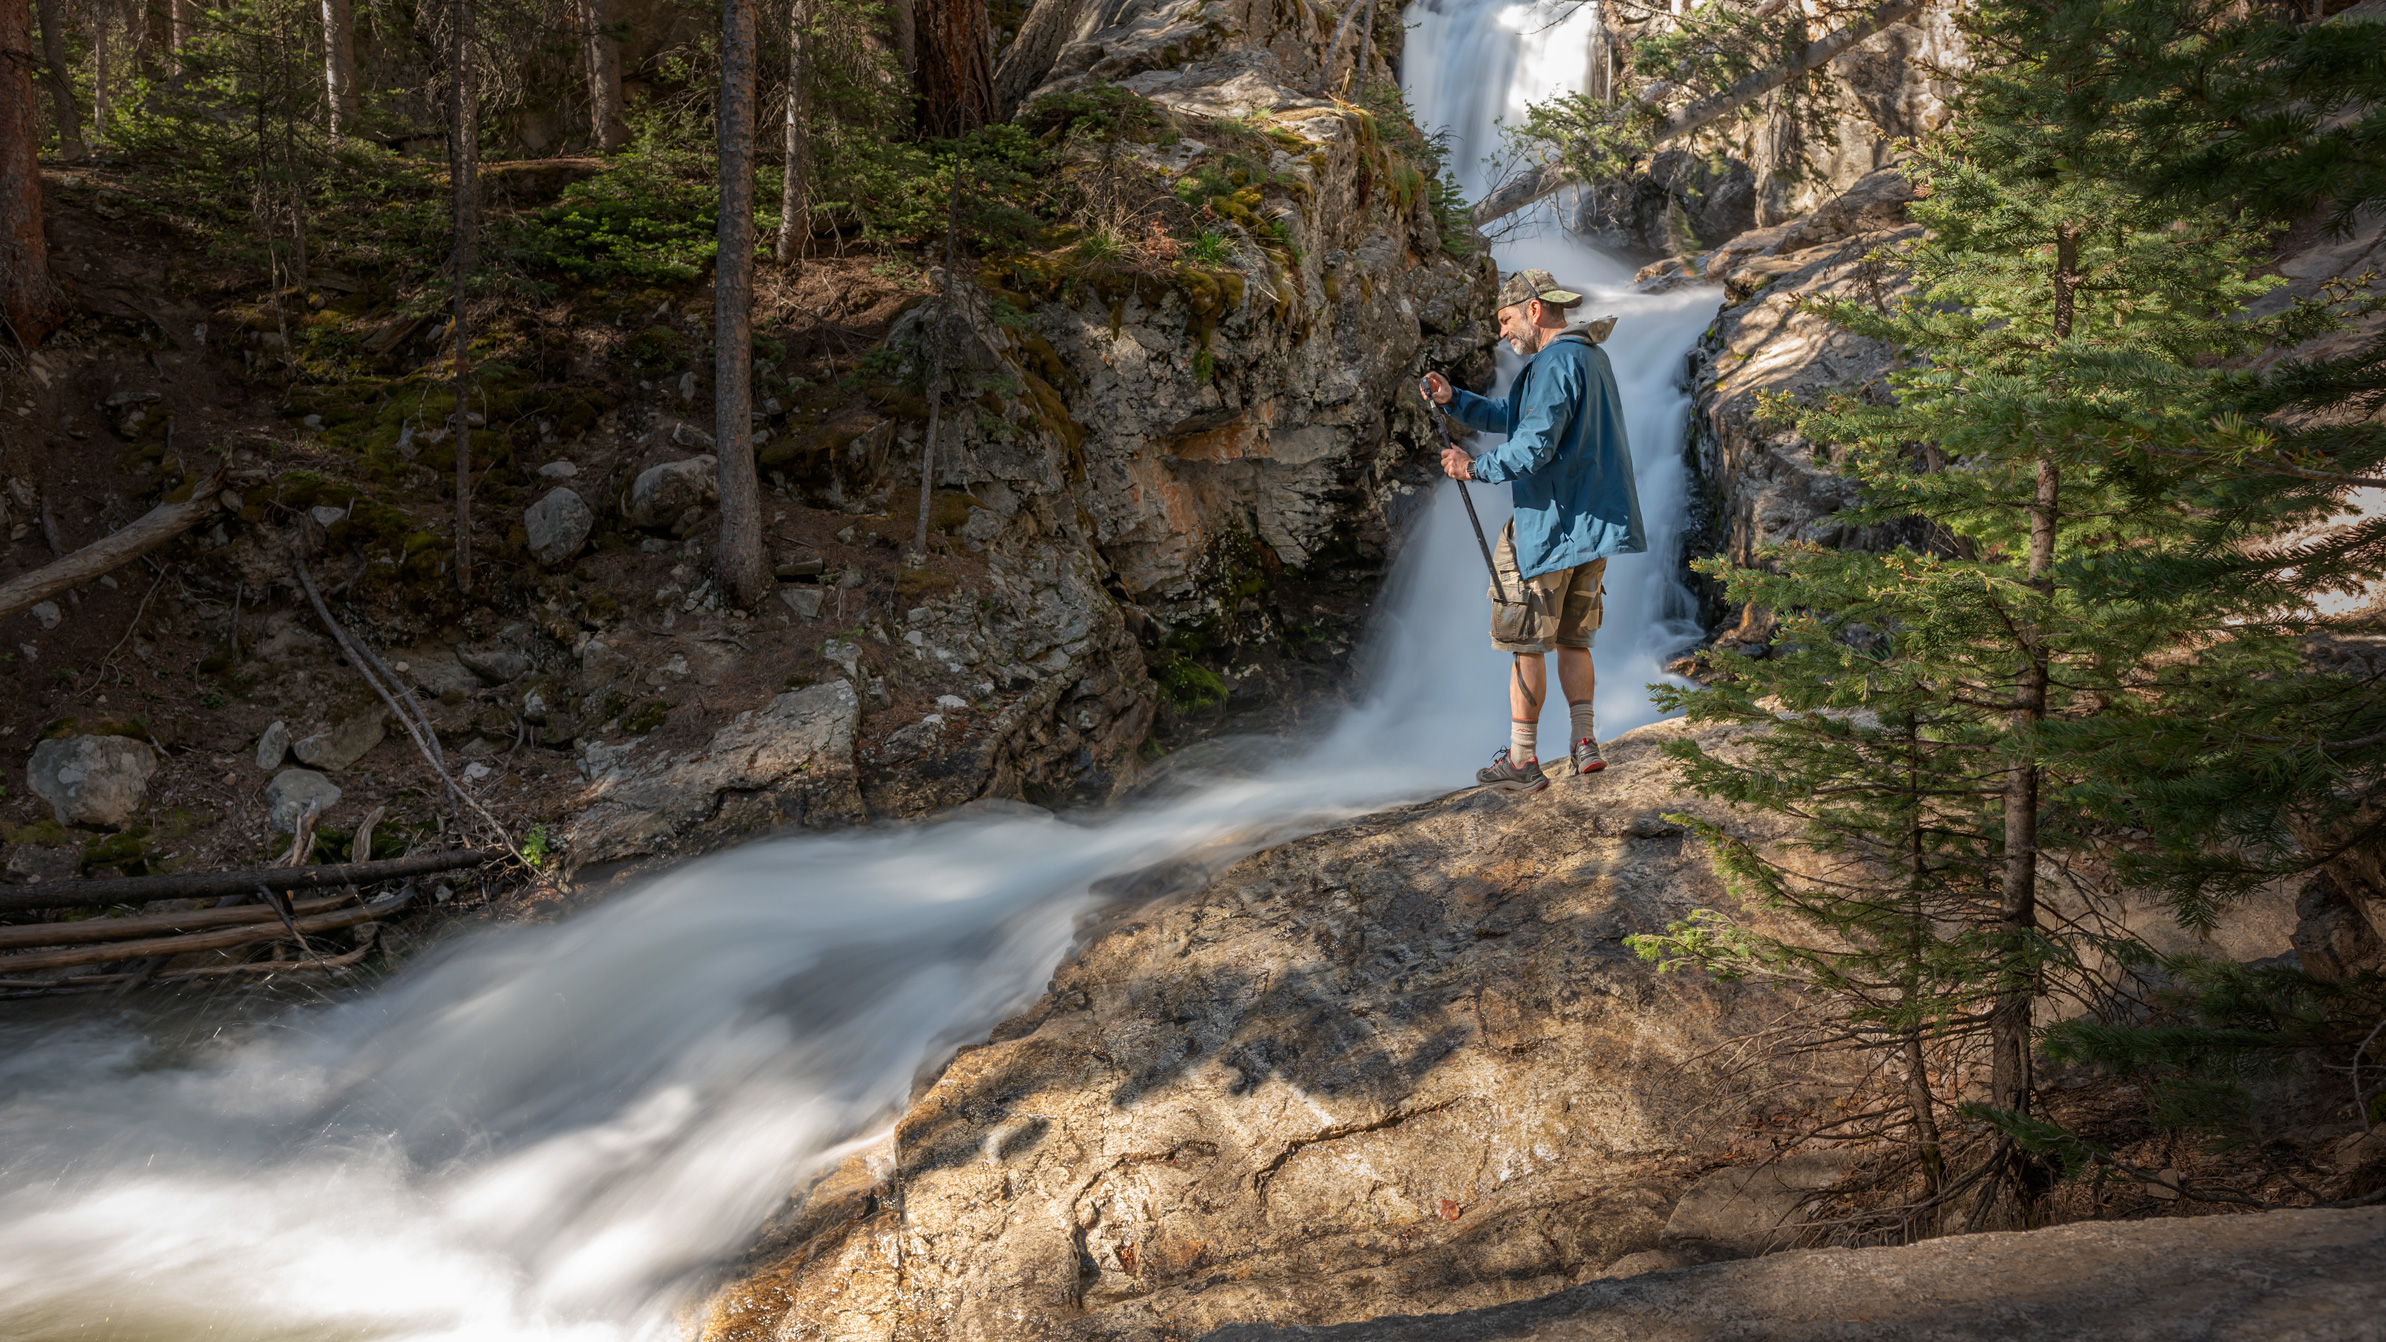 Dave Spates at Browns Creek falls, spring time